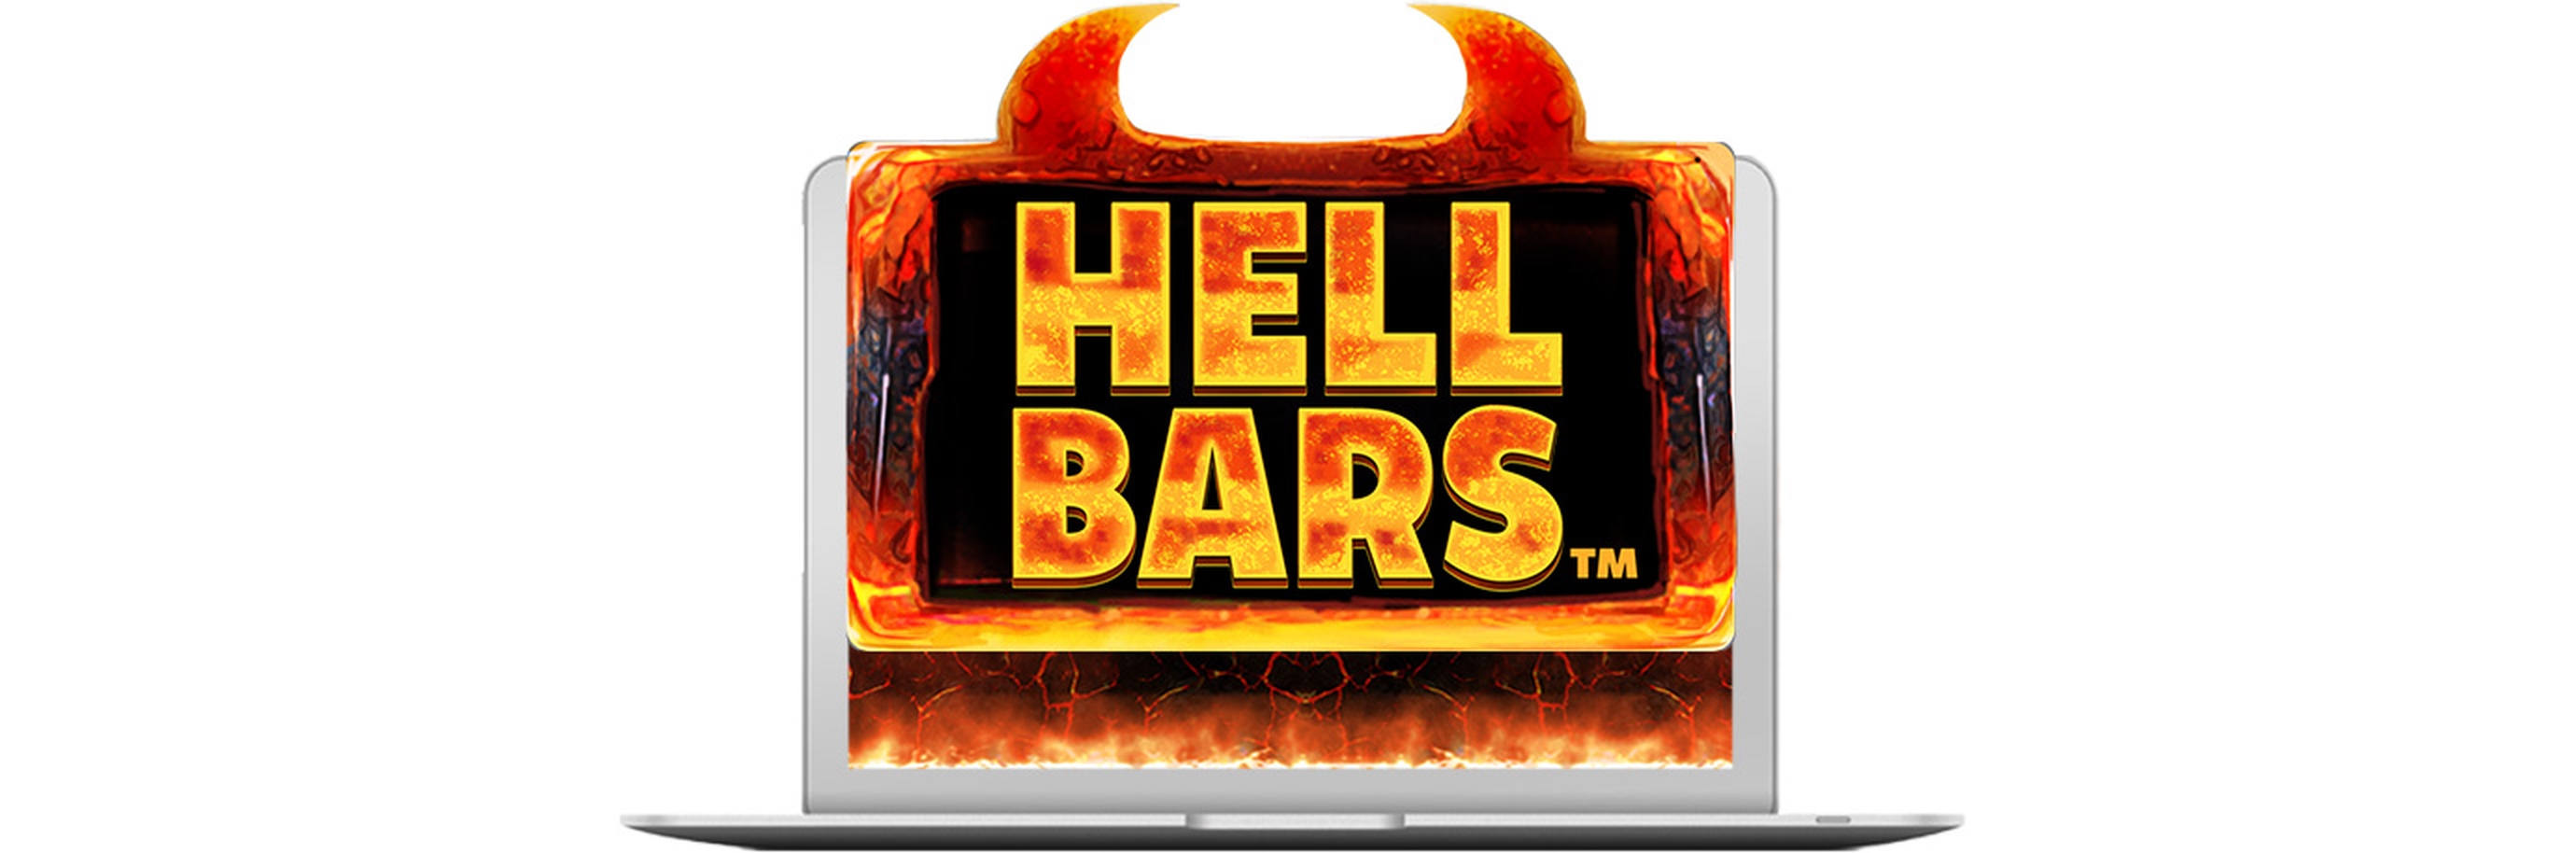 Hells Bars demo